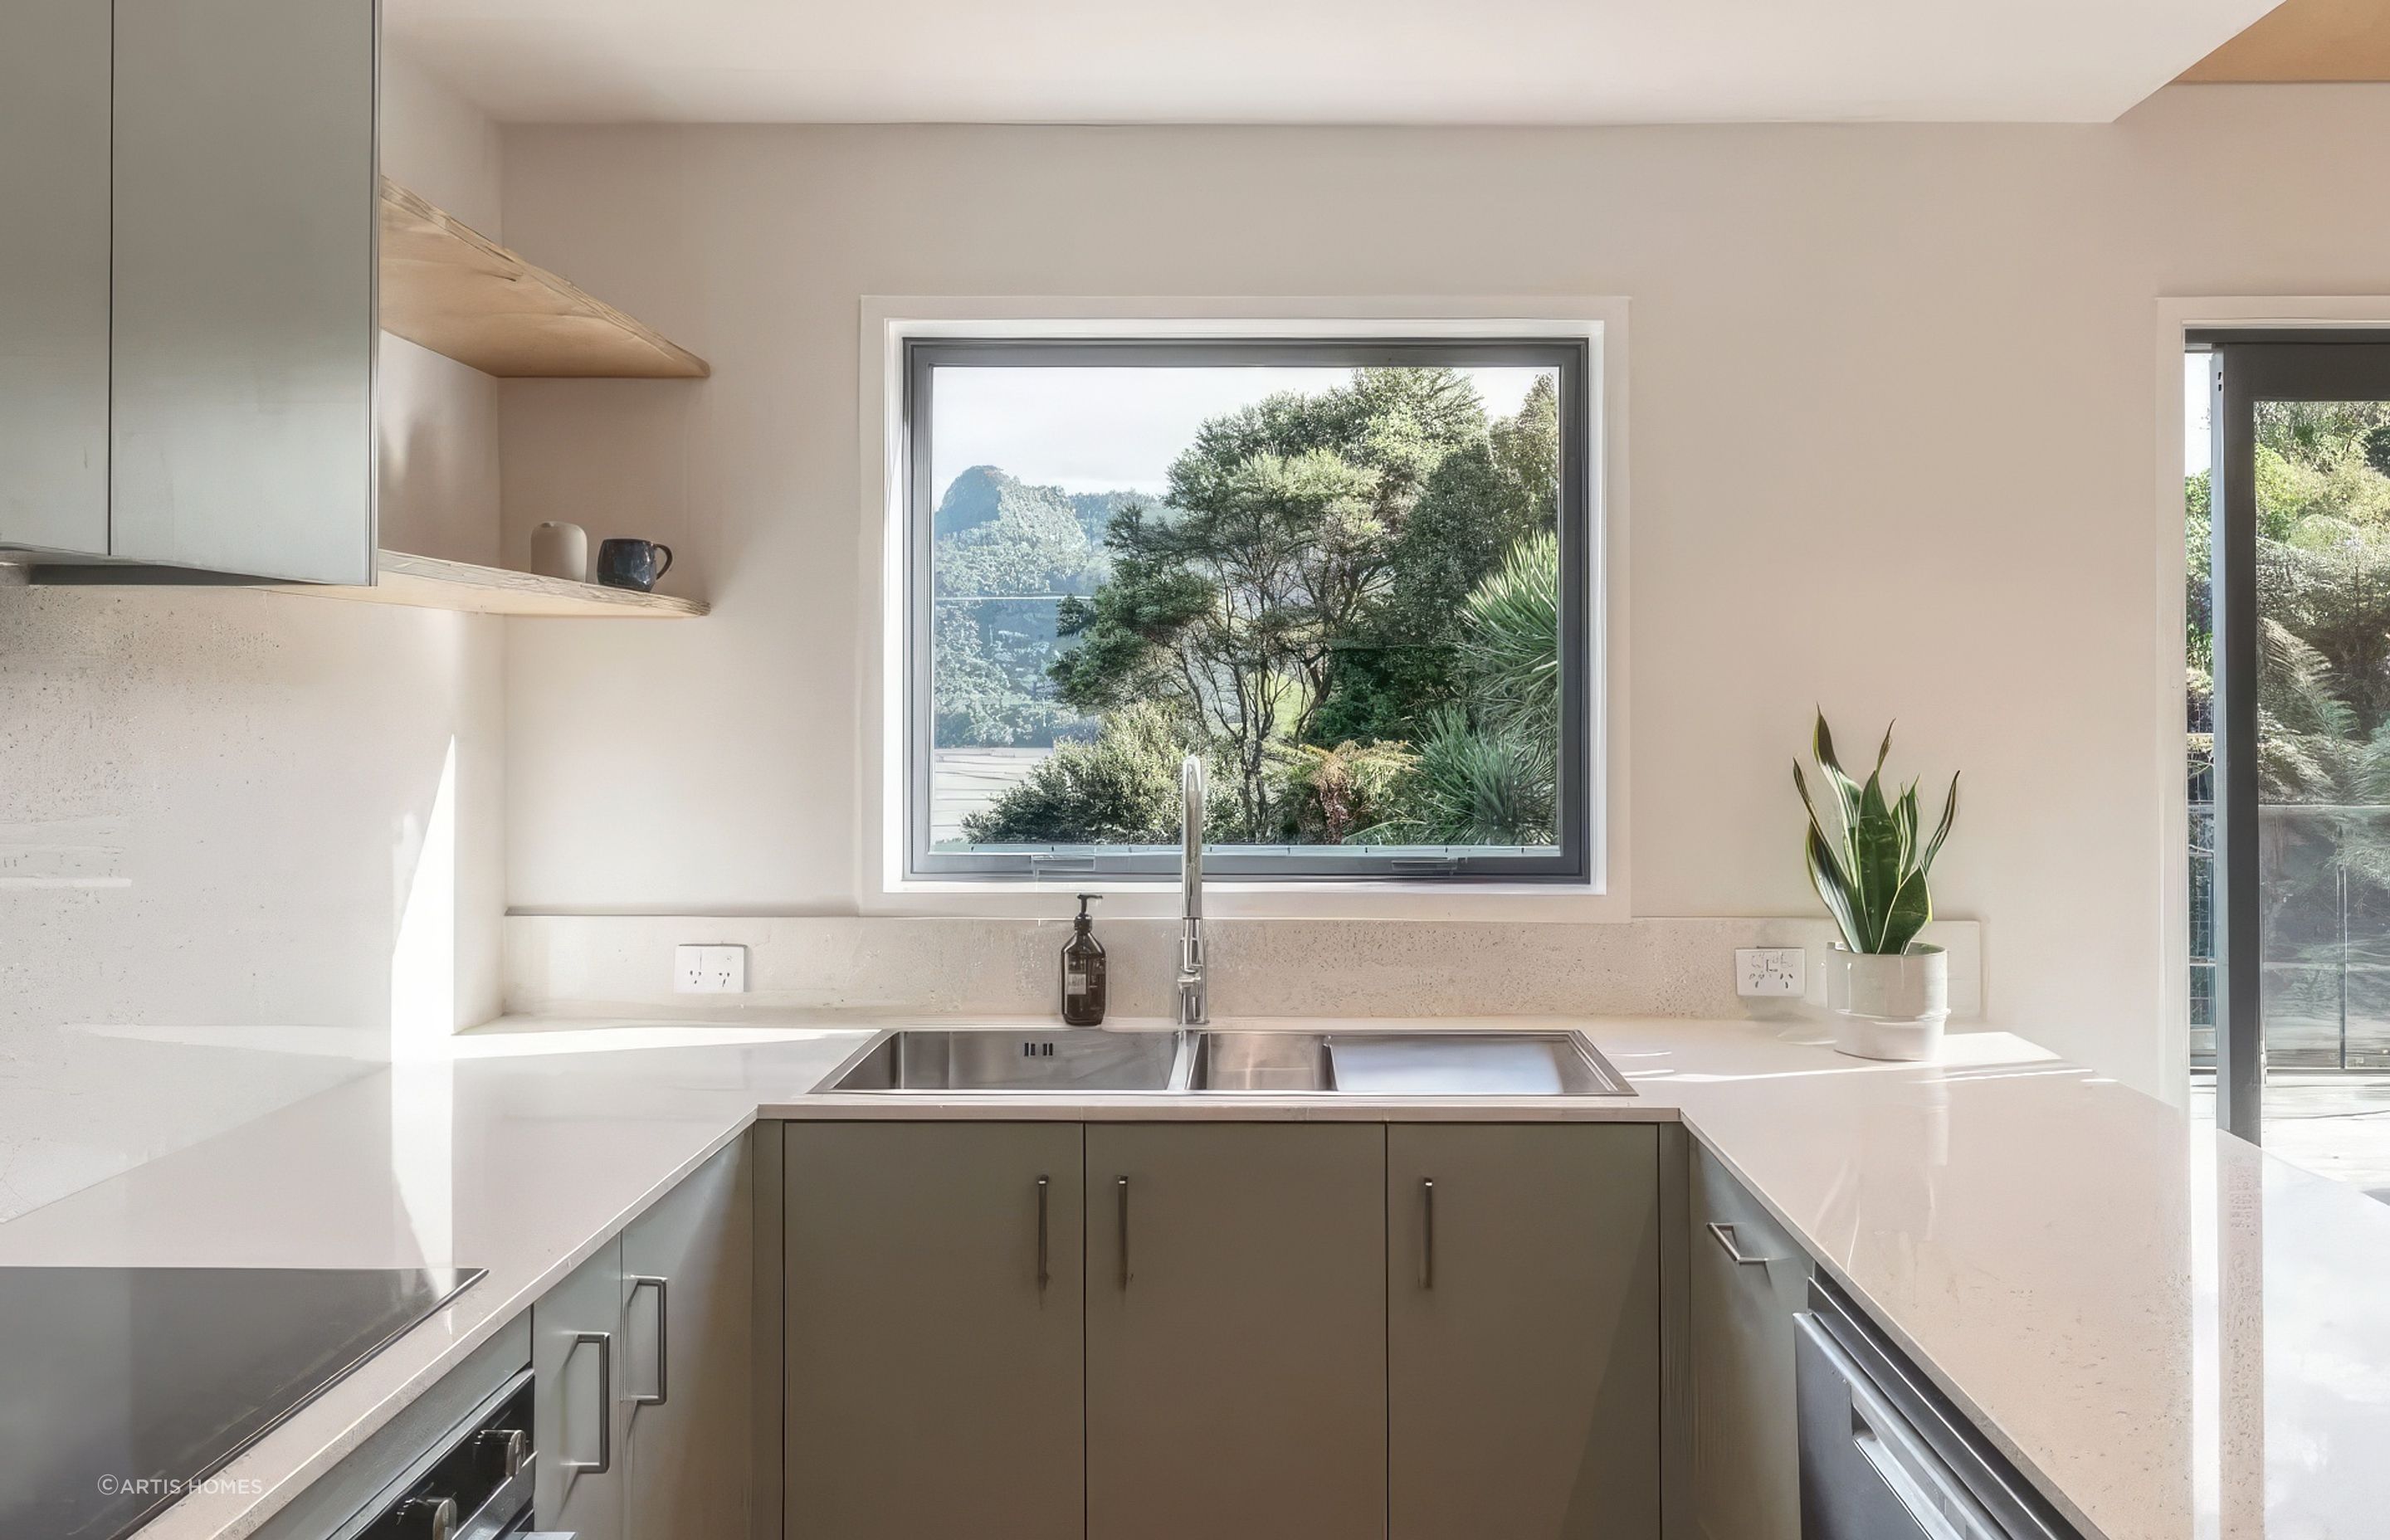 huia-kitchen-window-artis-home-960x640-gigapixel-standard-scale-200x.jpeg